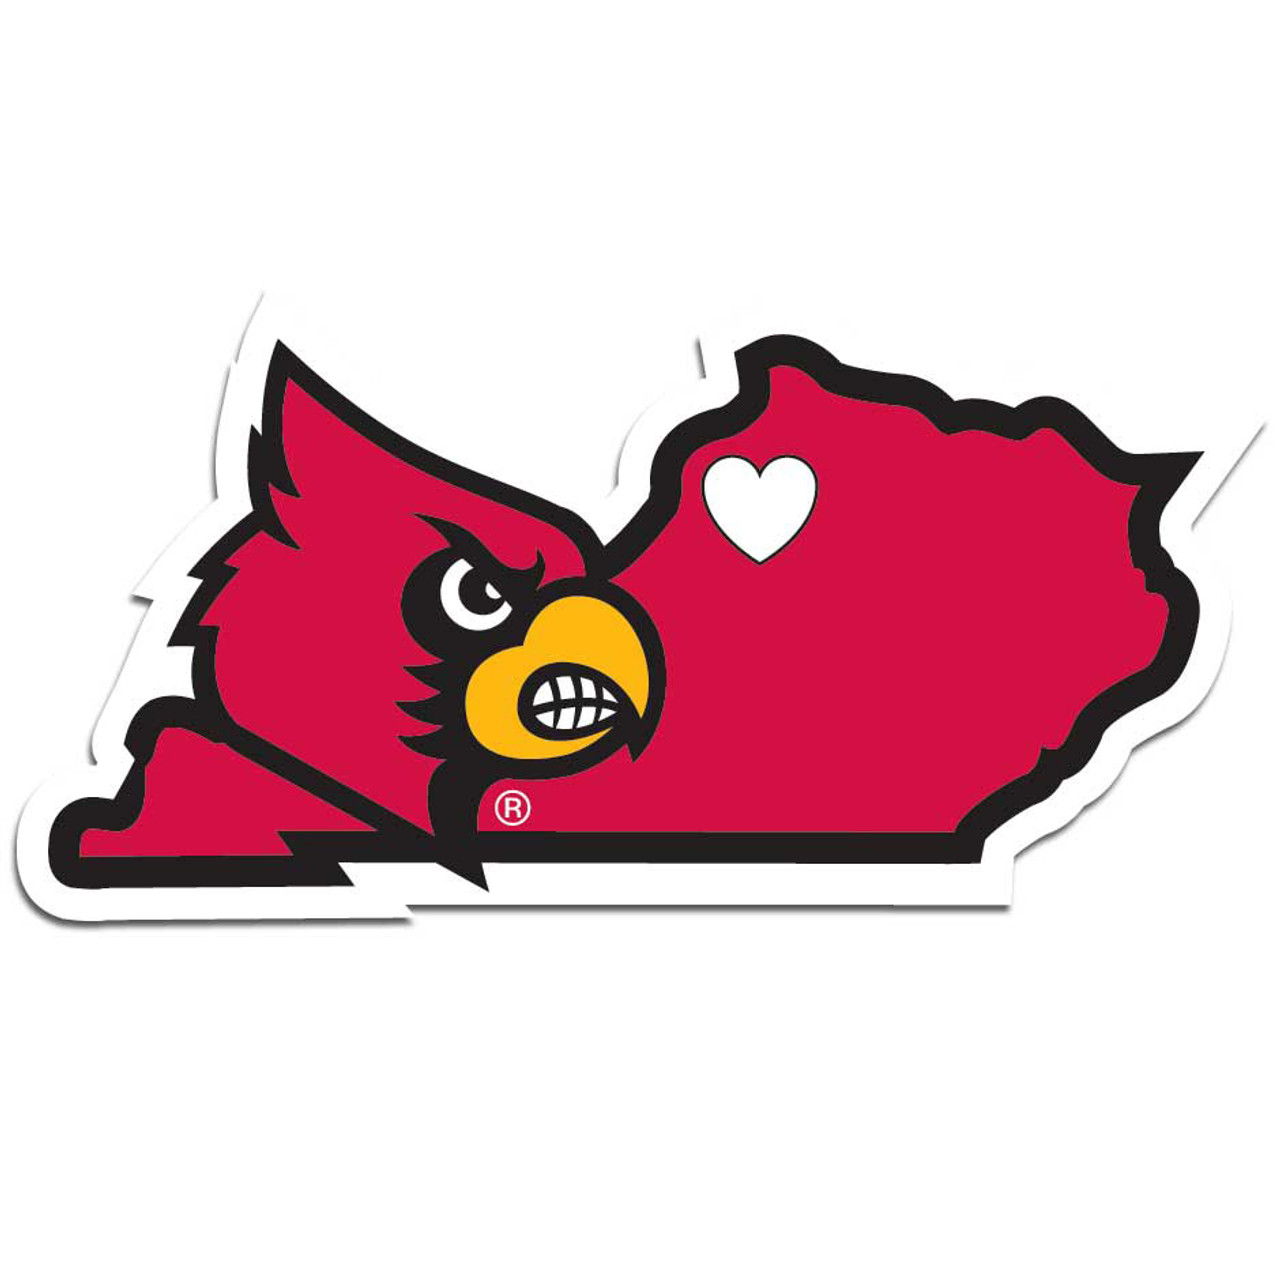 Louisville Cardinals NCAA Team Logo Mini Decals - Dragon Sports